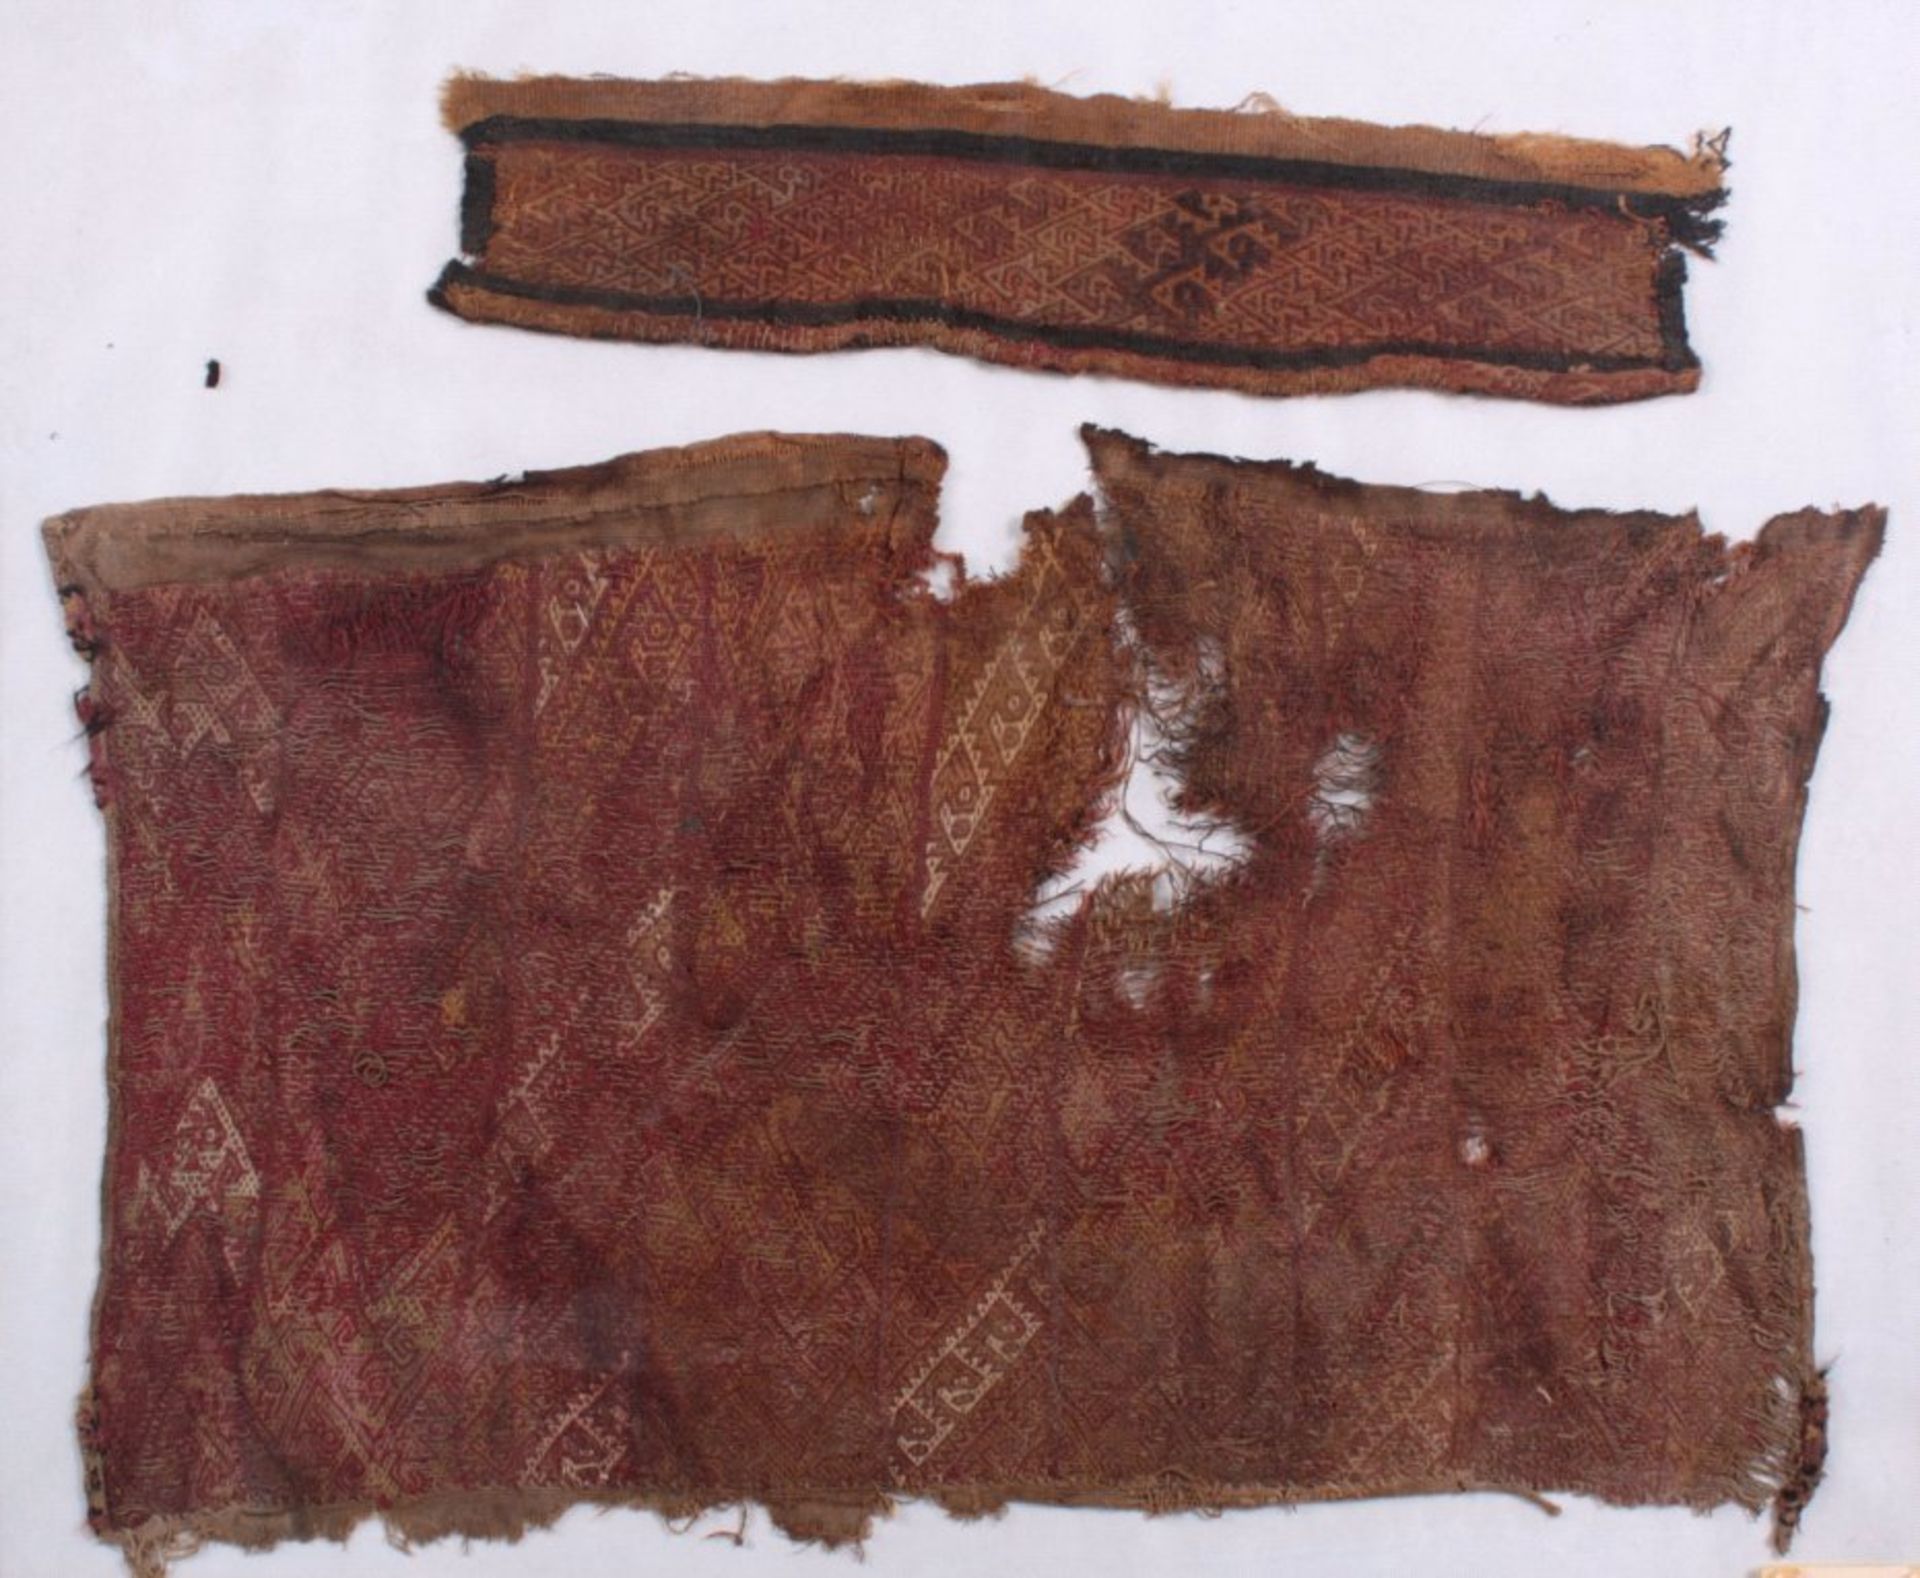 Chancy Kultur Textilfragmente, 1200- 1465 n. Chr.Gobelintechnik, hinter Glas, ca. 49x39 cm

Dieses